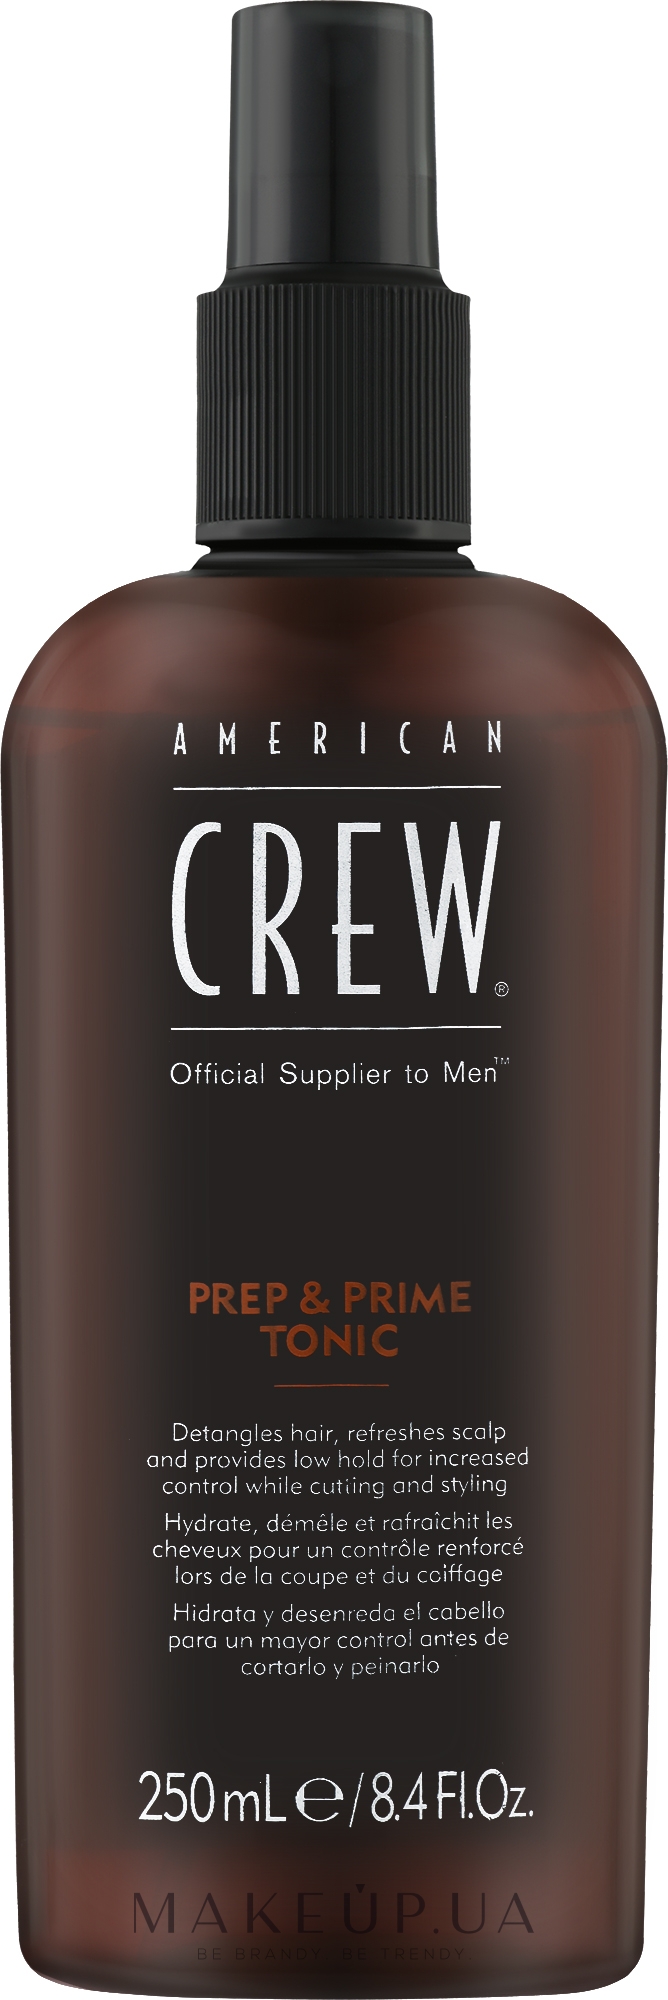 Тоник для волос - American Crew Official Supplier to Men Prep & Prime Tonic — фото 250ml